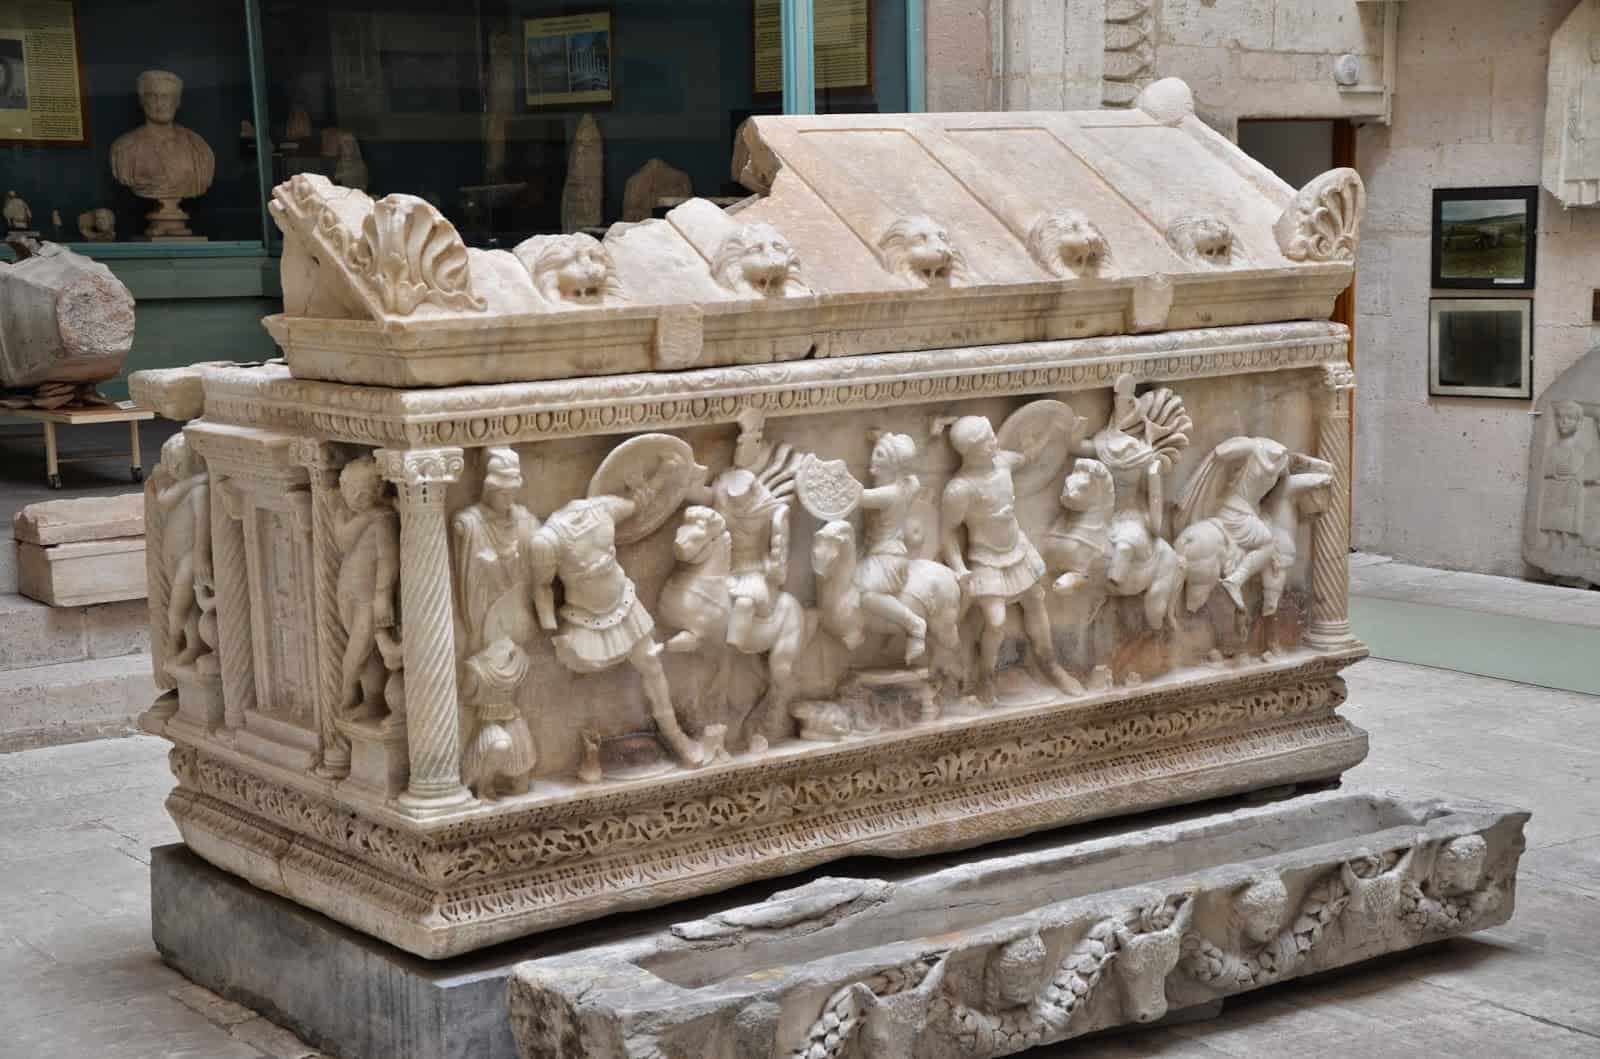 Sarcophagus at the Kütahya Archaeology Museum in Kütahya, Turkey